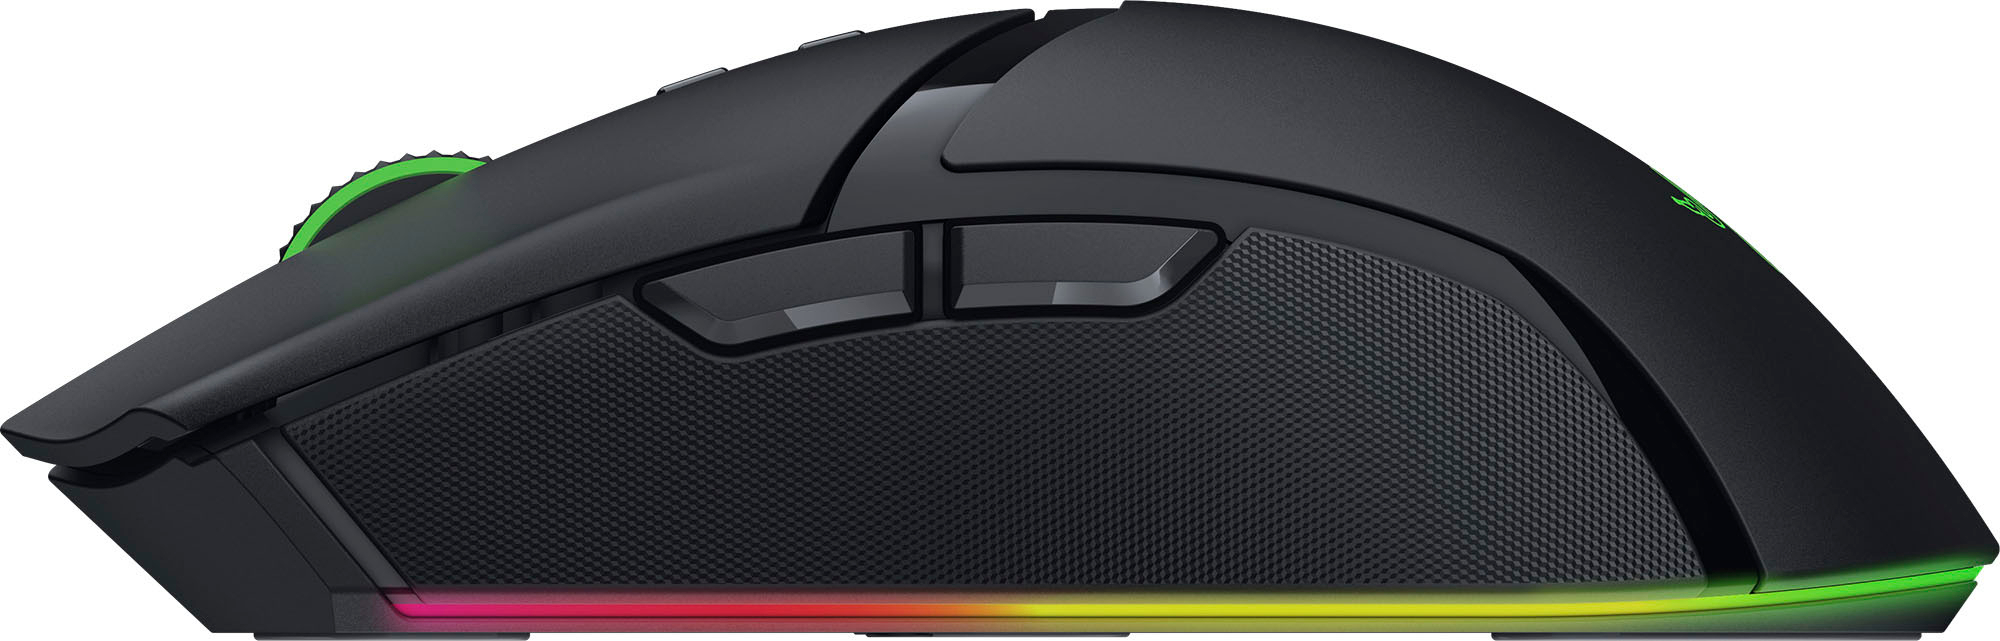 Razer Cobra Pro Wireless Gaming Mouse with Chroma RGB Lighting and